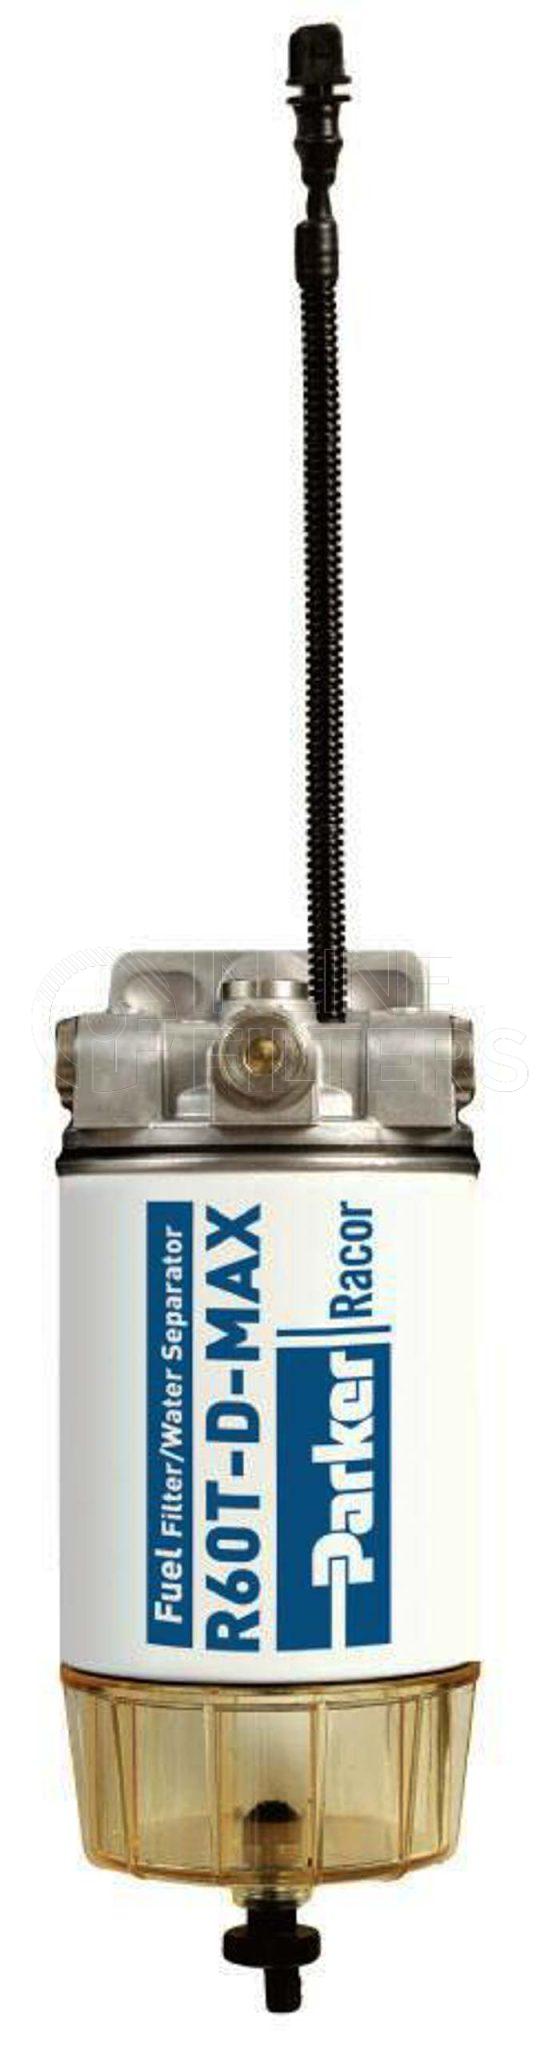 Racor 490RHH2MTC. Fuel Filter Water Separator - Racor Spin-on Series - 490RHH2MTC.